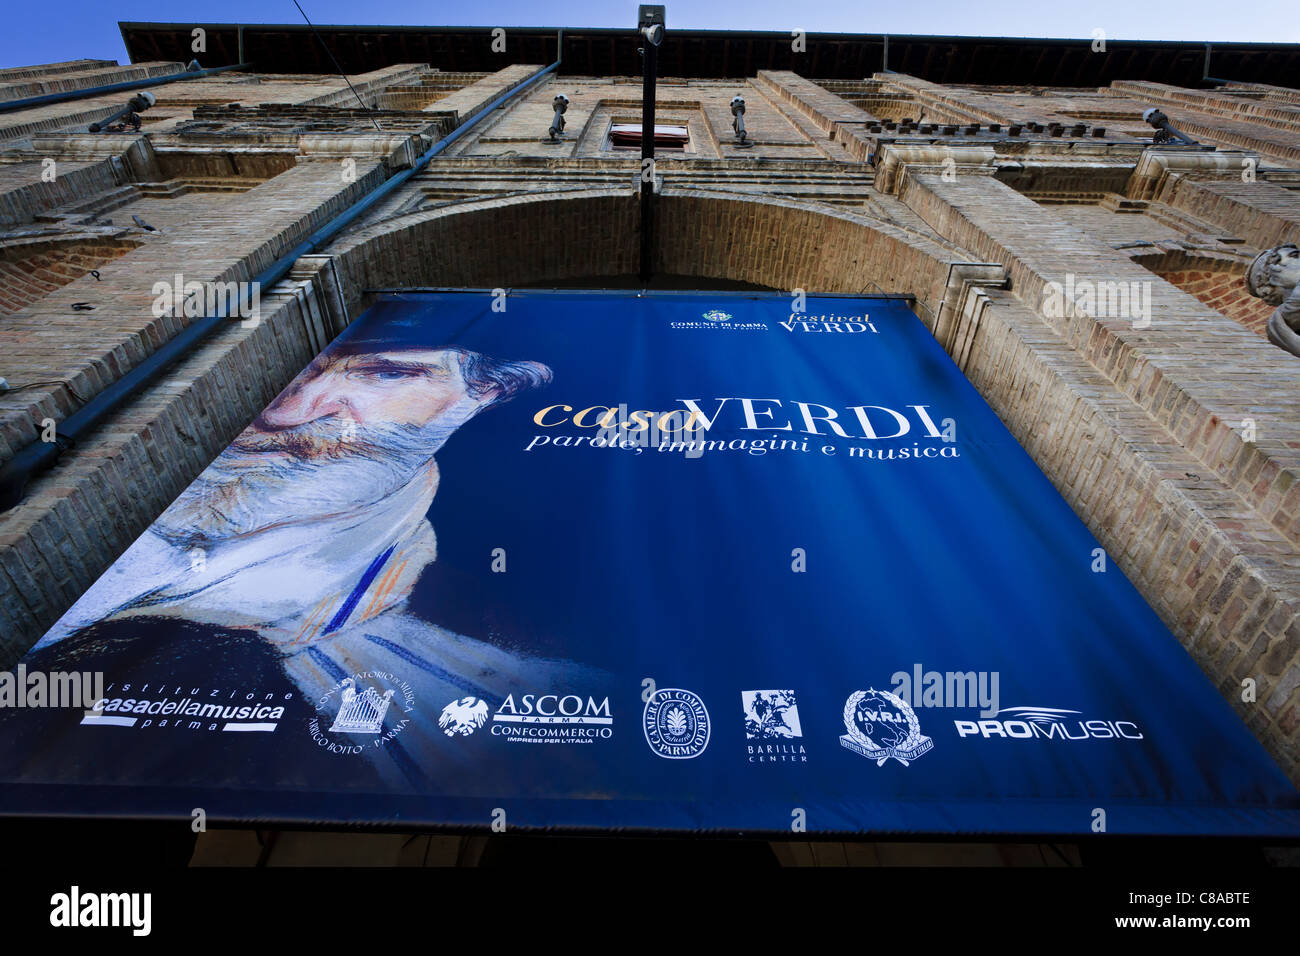 Poster advertising Verdi events in Parma, Italy Stock Photo